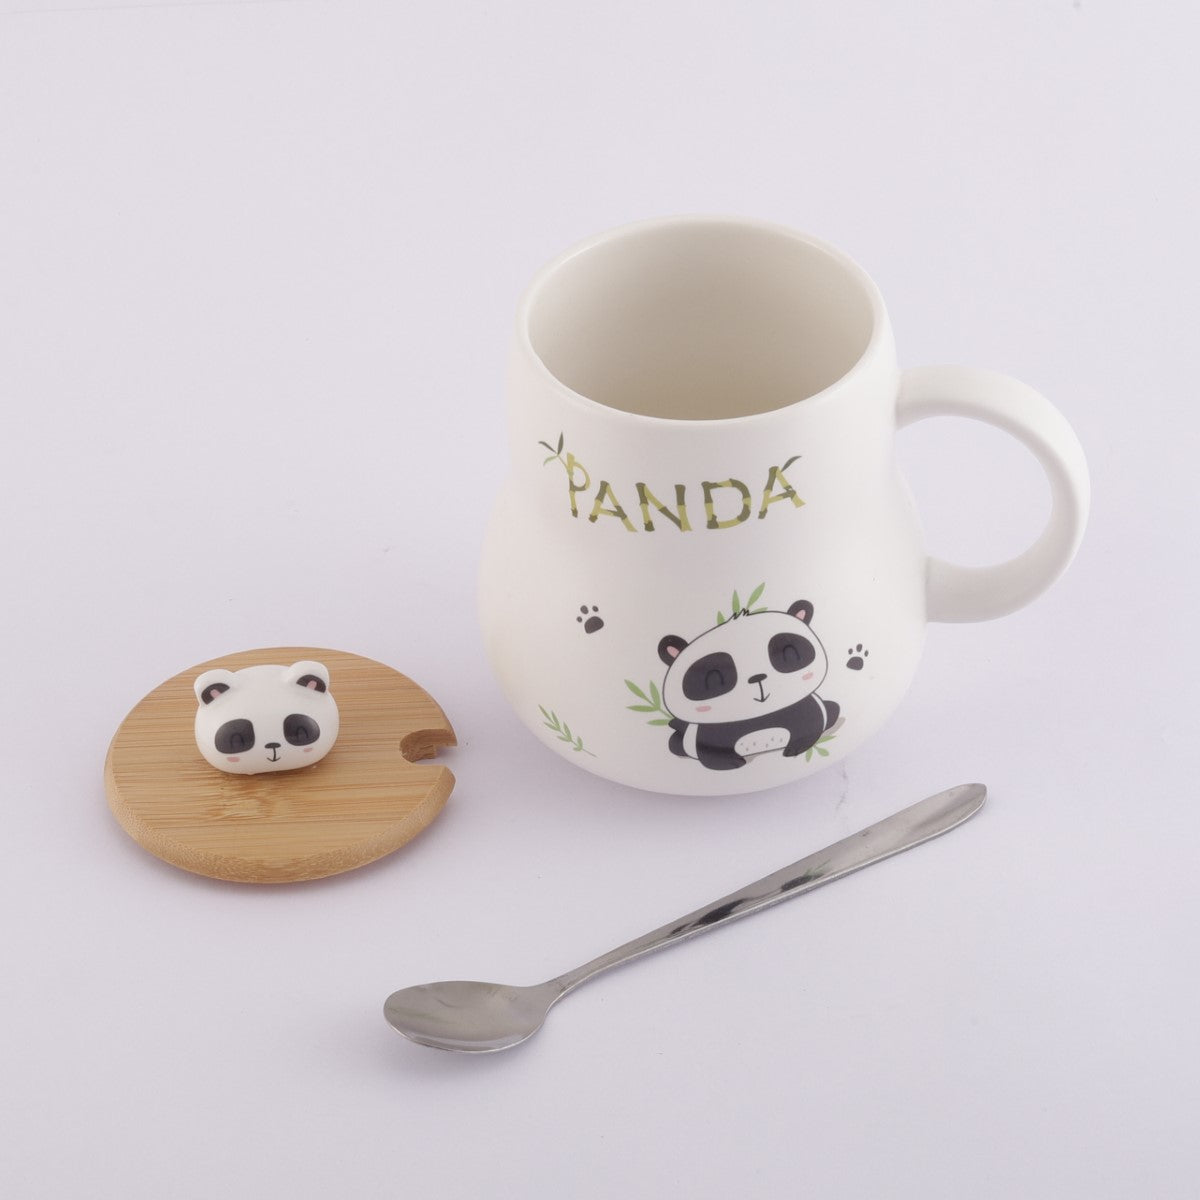 Panda Mug with Spoon